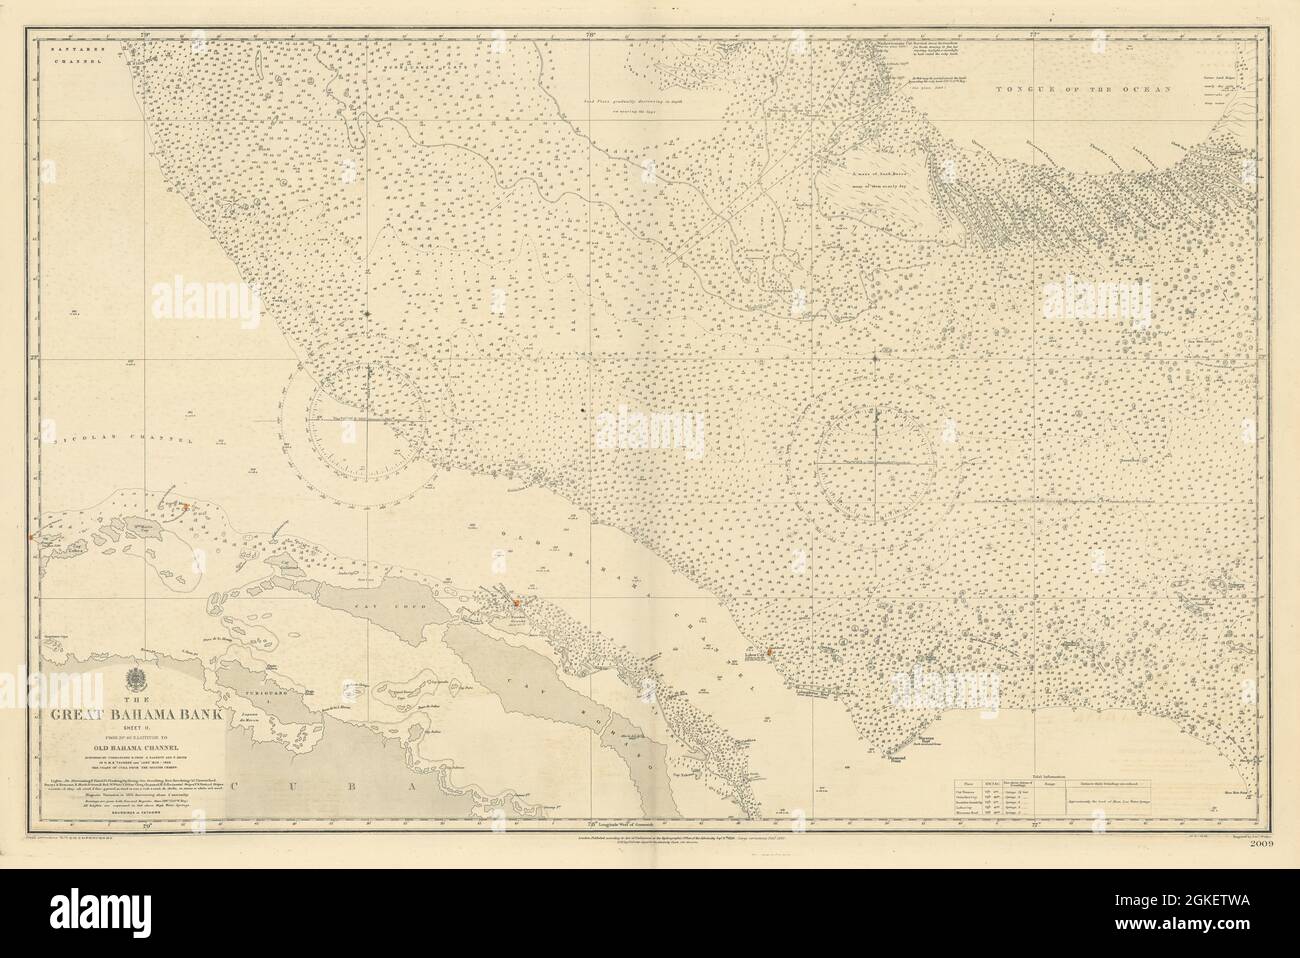 Große Bahama Bank. Jardines del Rey. Kuba. ADMIRALTY Seekarte 1850 (1912) Karte Stockfoto